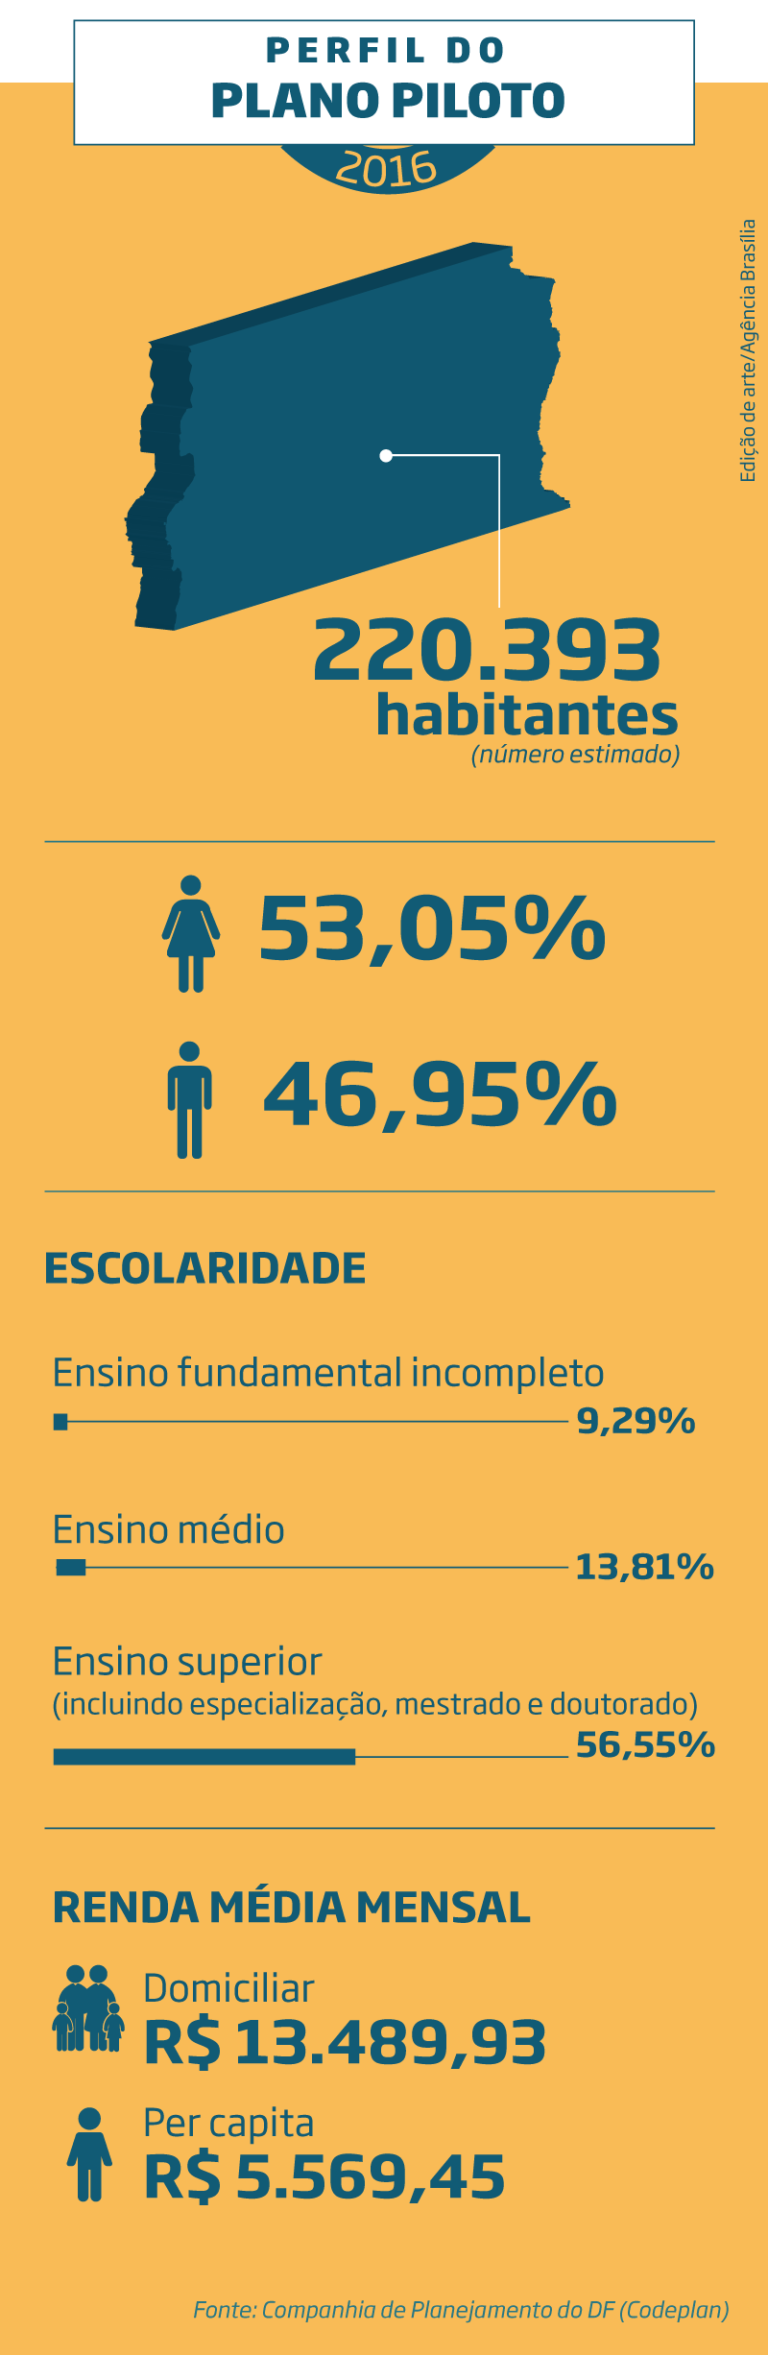 perfil do plano piloto Agencia Brasilia